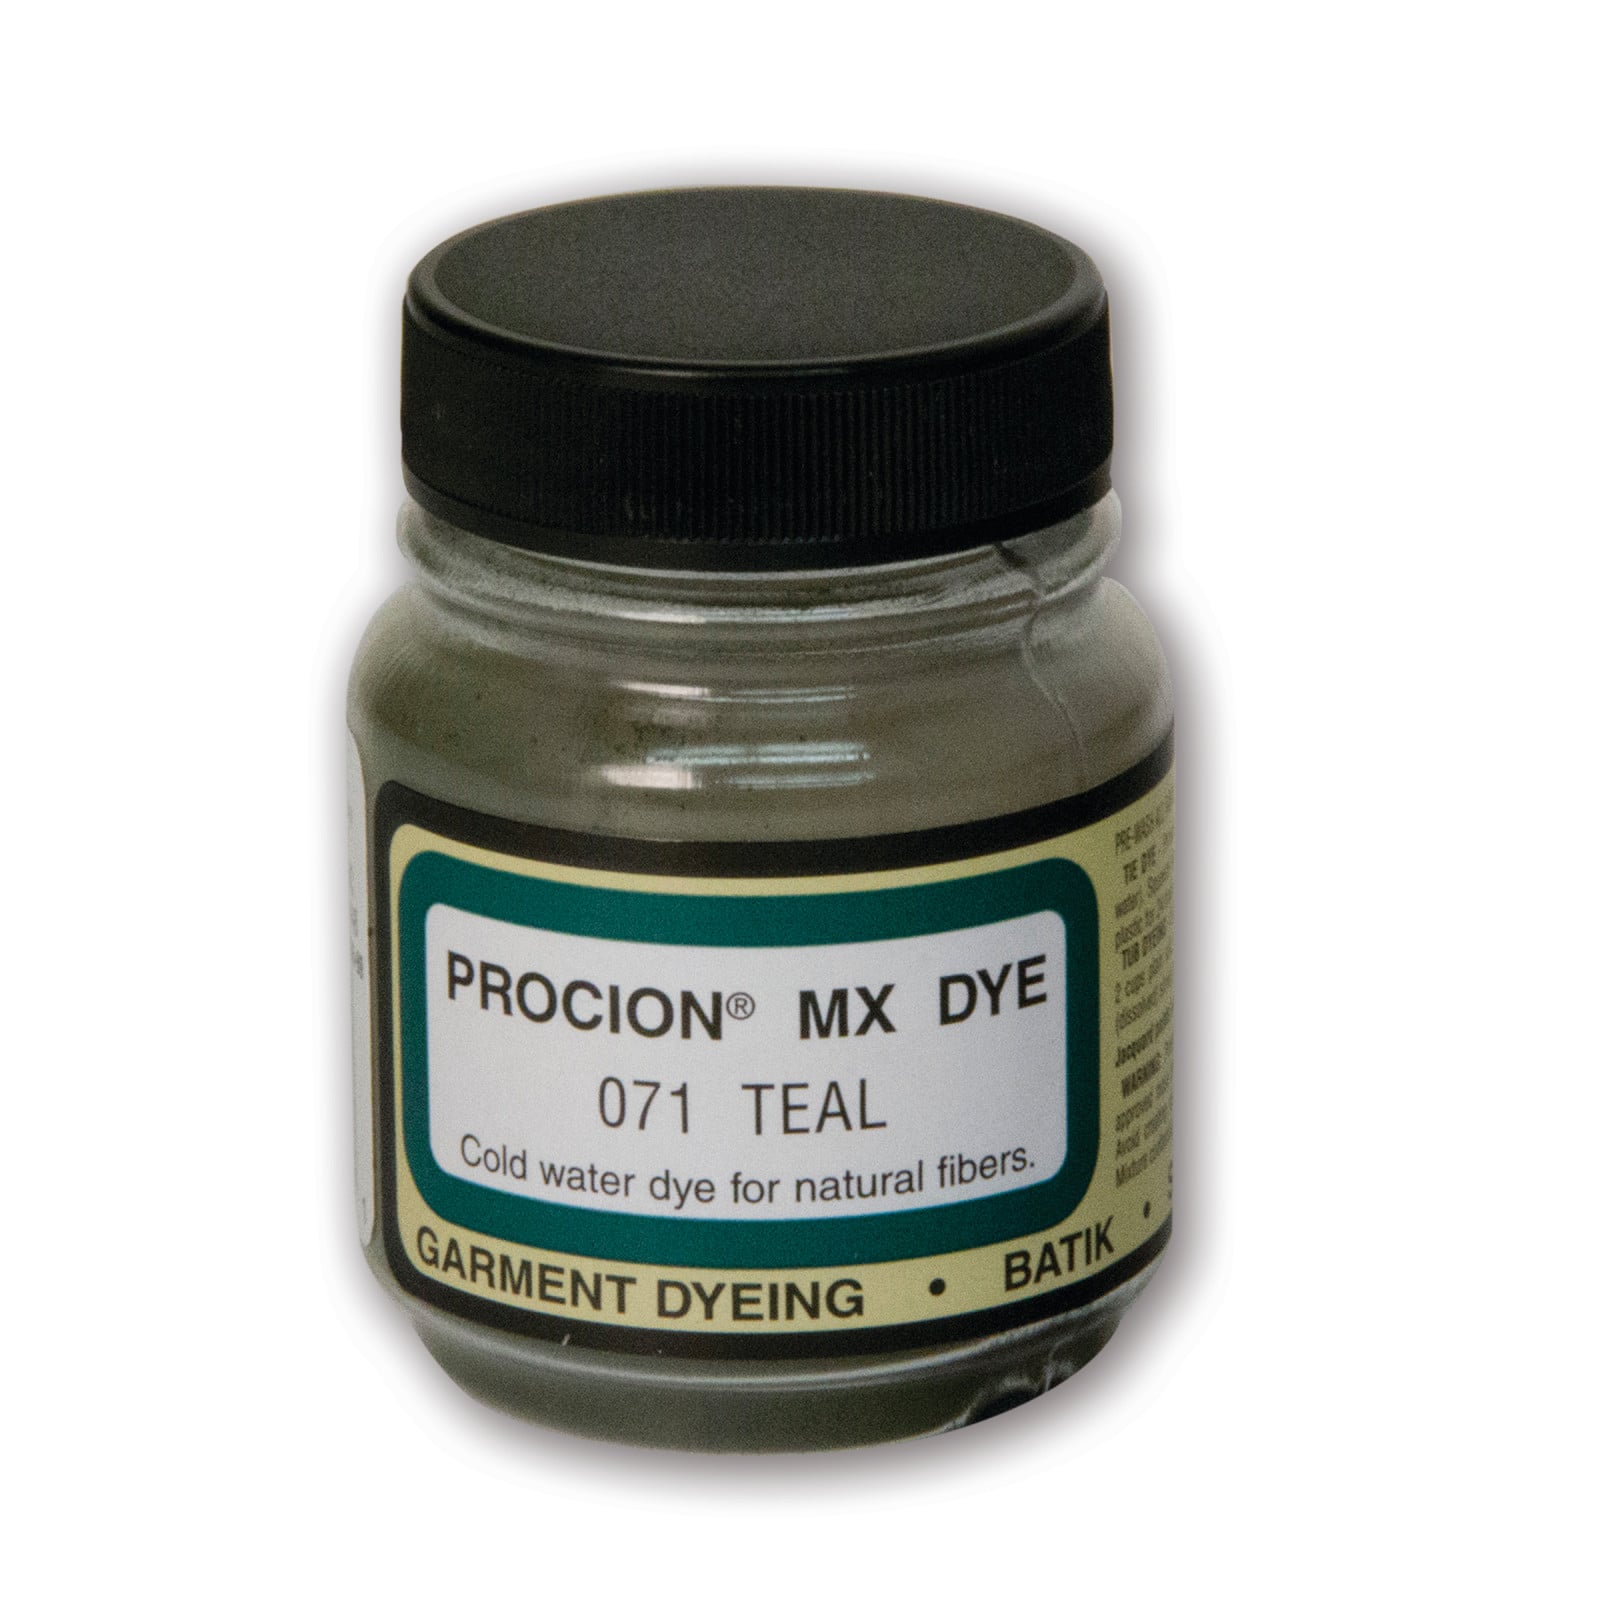 Jacquard Procion Mx Dye - Undisputed King of Tie Dye Powder - Cobalt Blue -  8 Oz - Cold Water Fiber Reactive Dye Made in USA